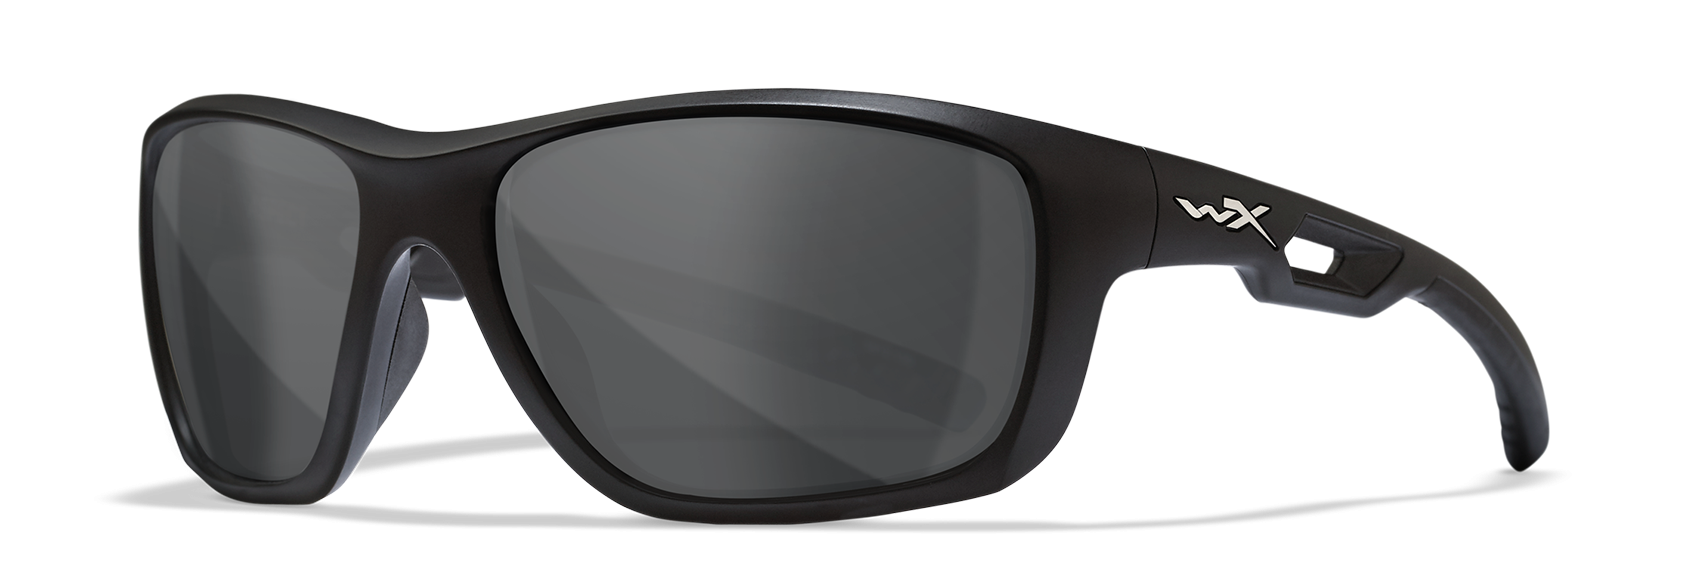 Wiley X WX Aspect Smoke Gray Lens Polycarbonate Sunglasses